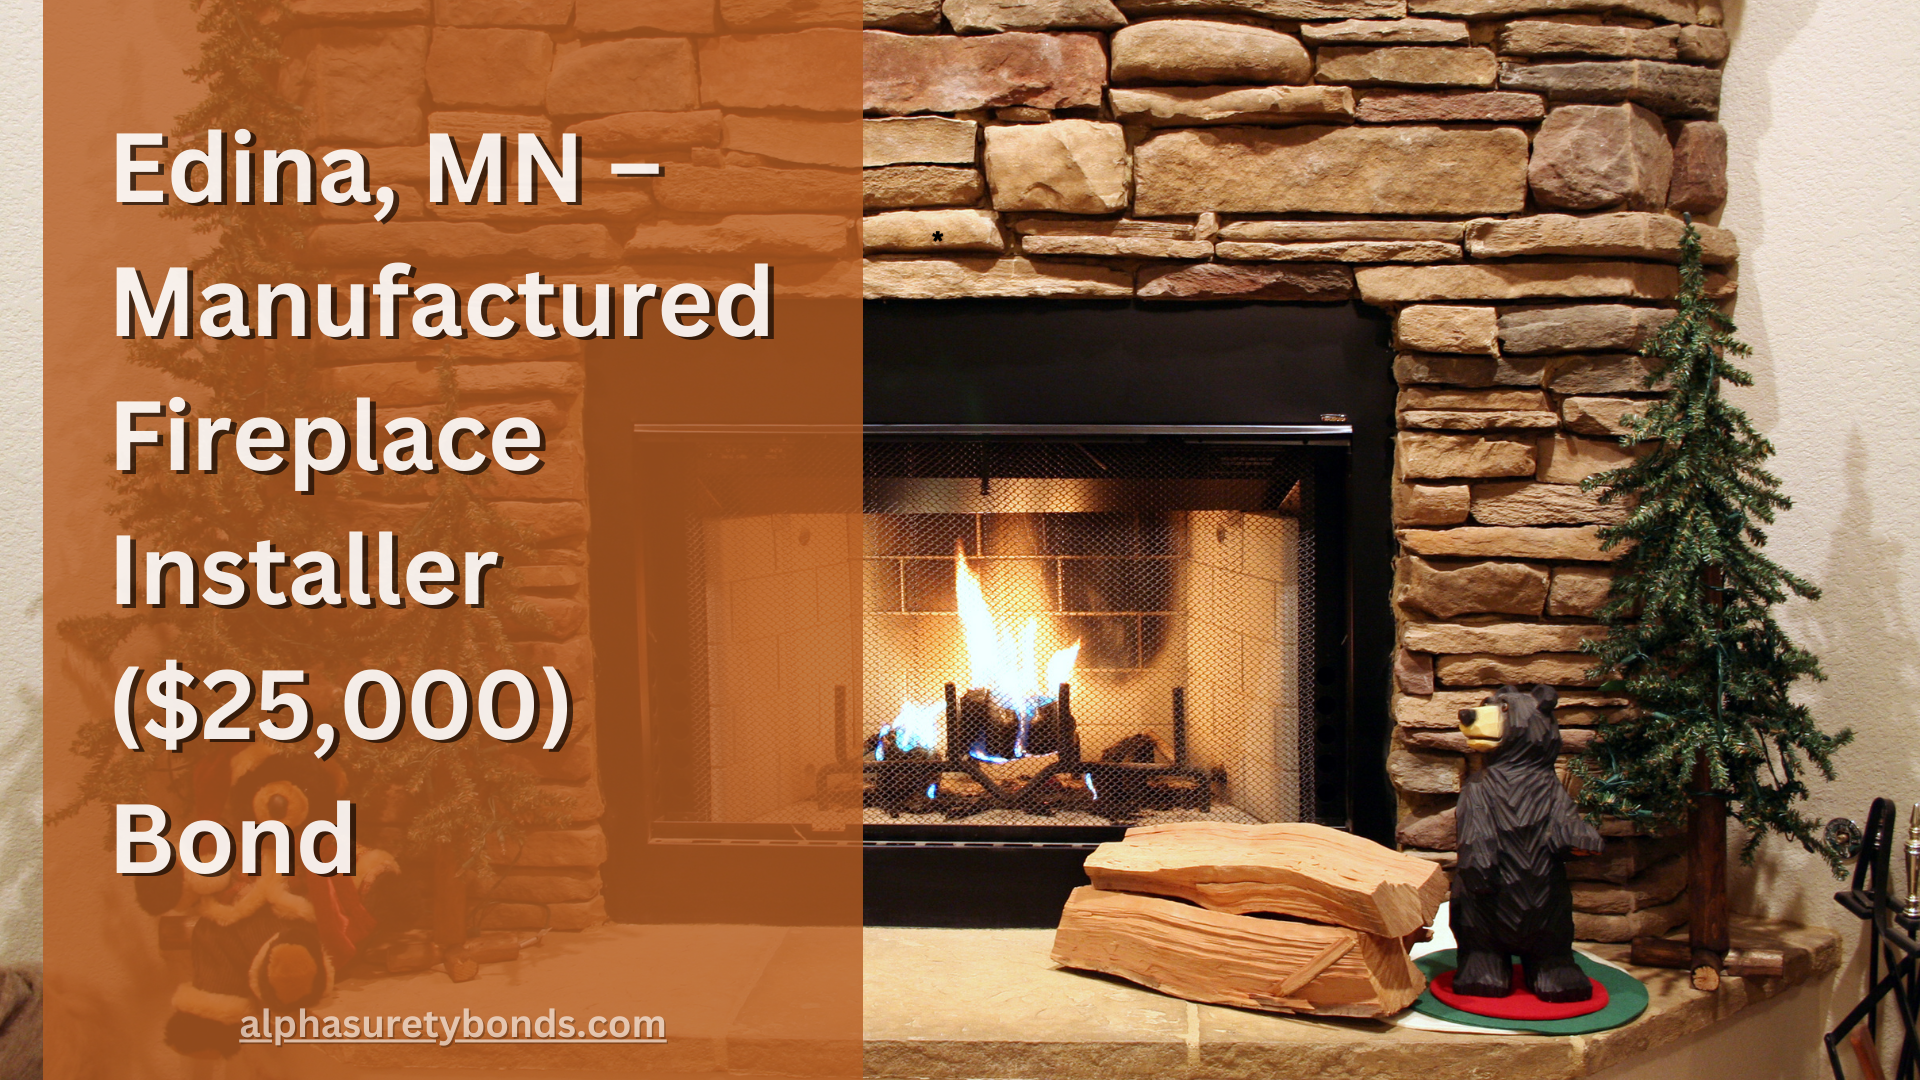 Edina, MN – Manufactured Fireplace Installer ($25,000) Bond